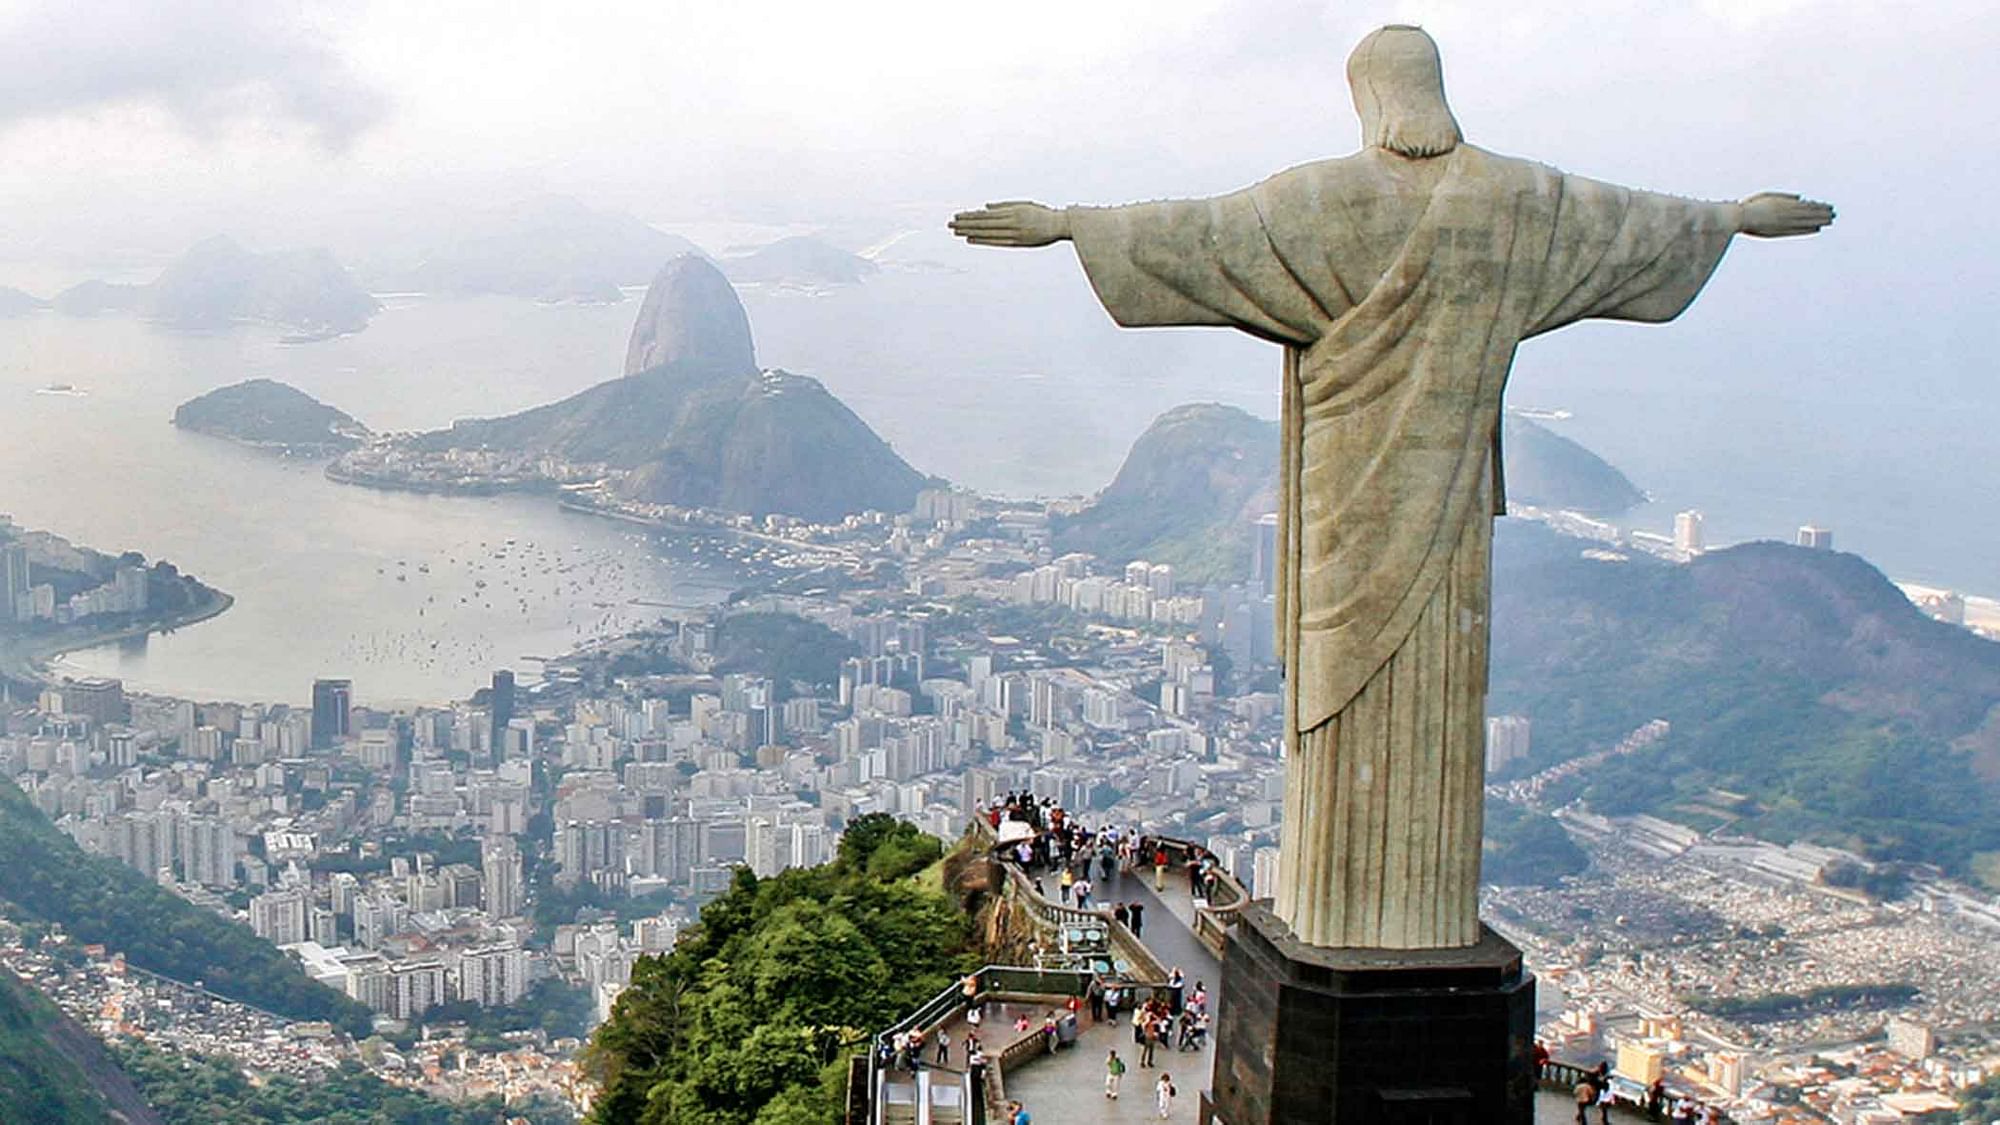 Christ The Redeemer statue in Rio De Janeiro. (Photo Courtesy: Kirilos/flickr)